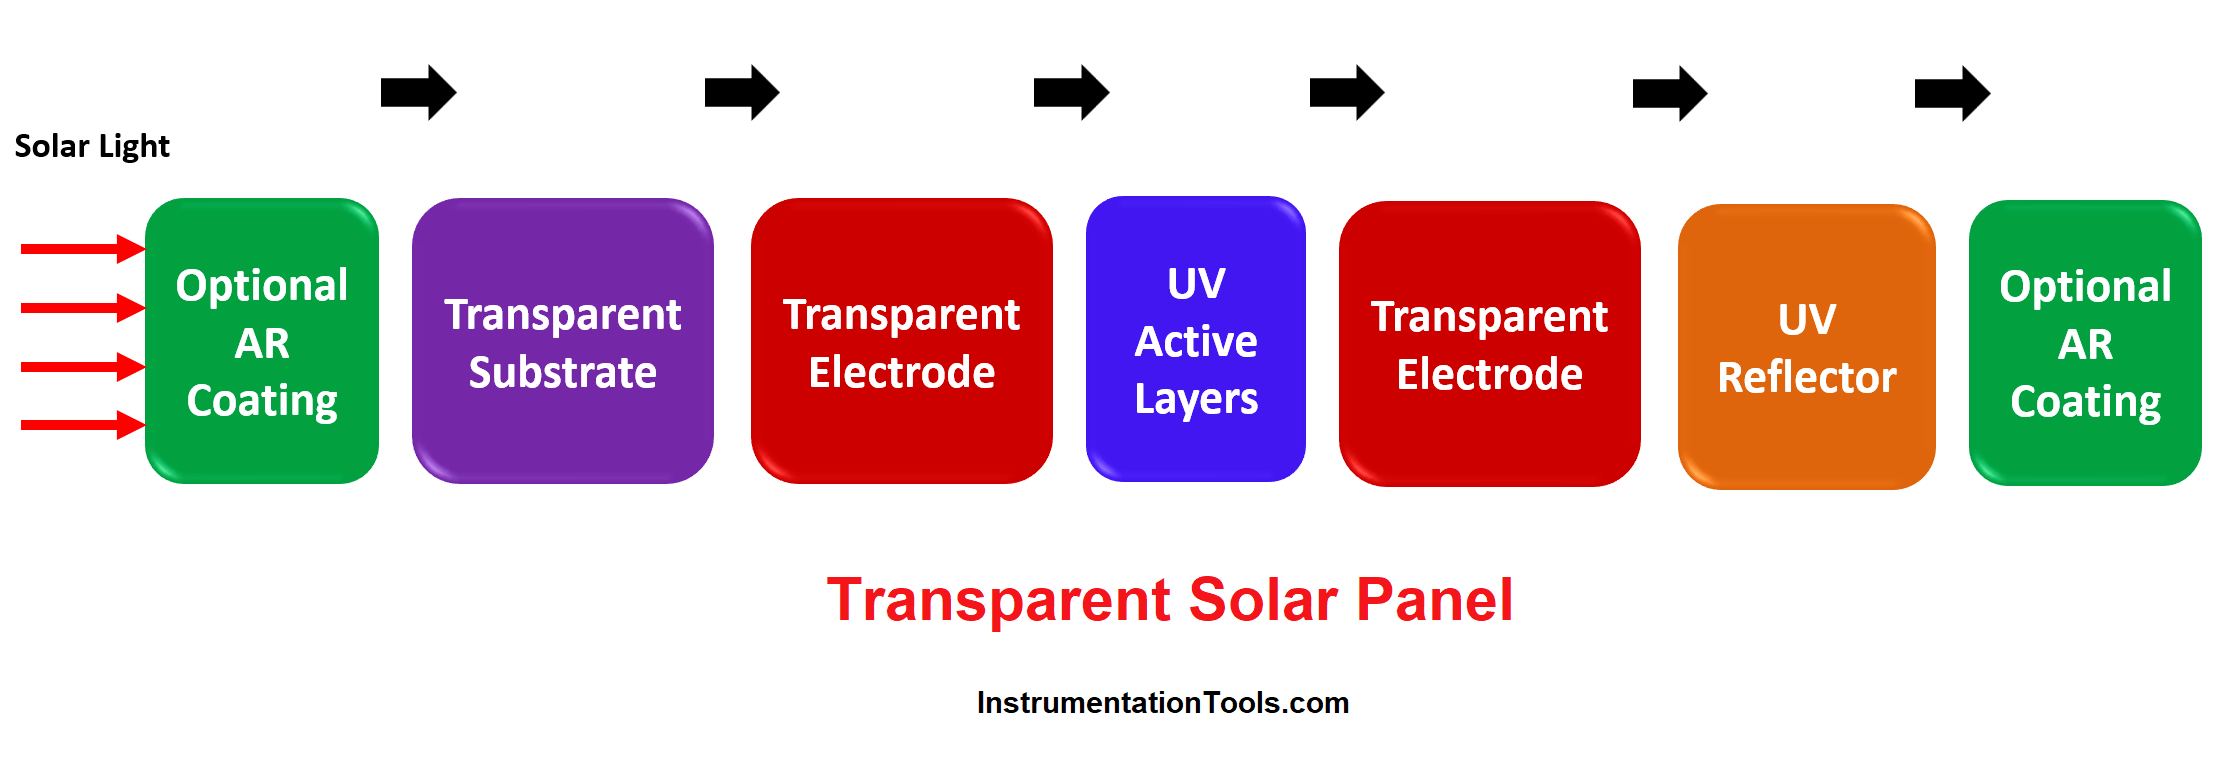 Transparent Solar Panel Working Principle